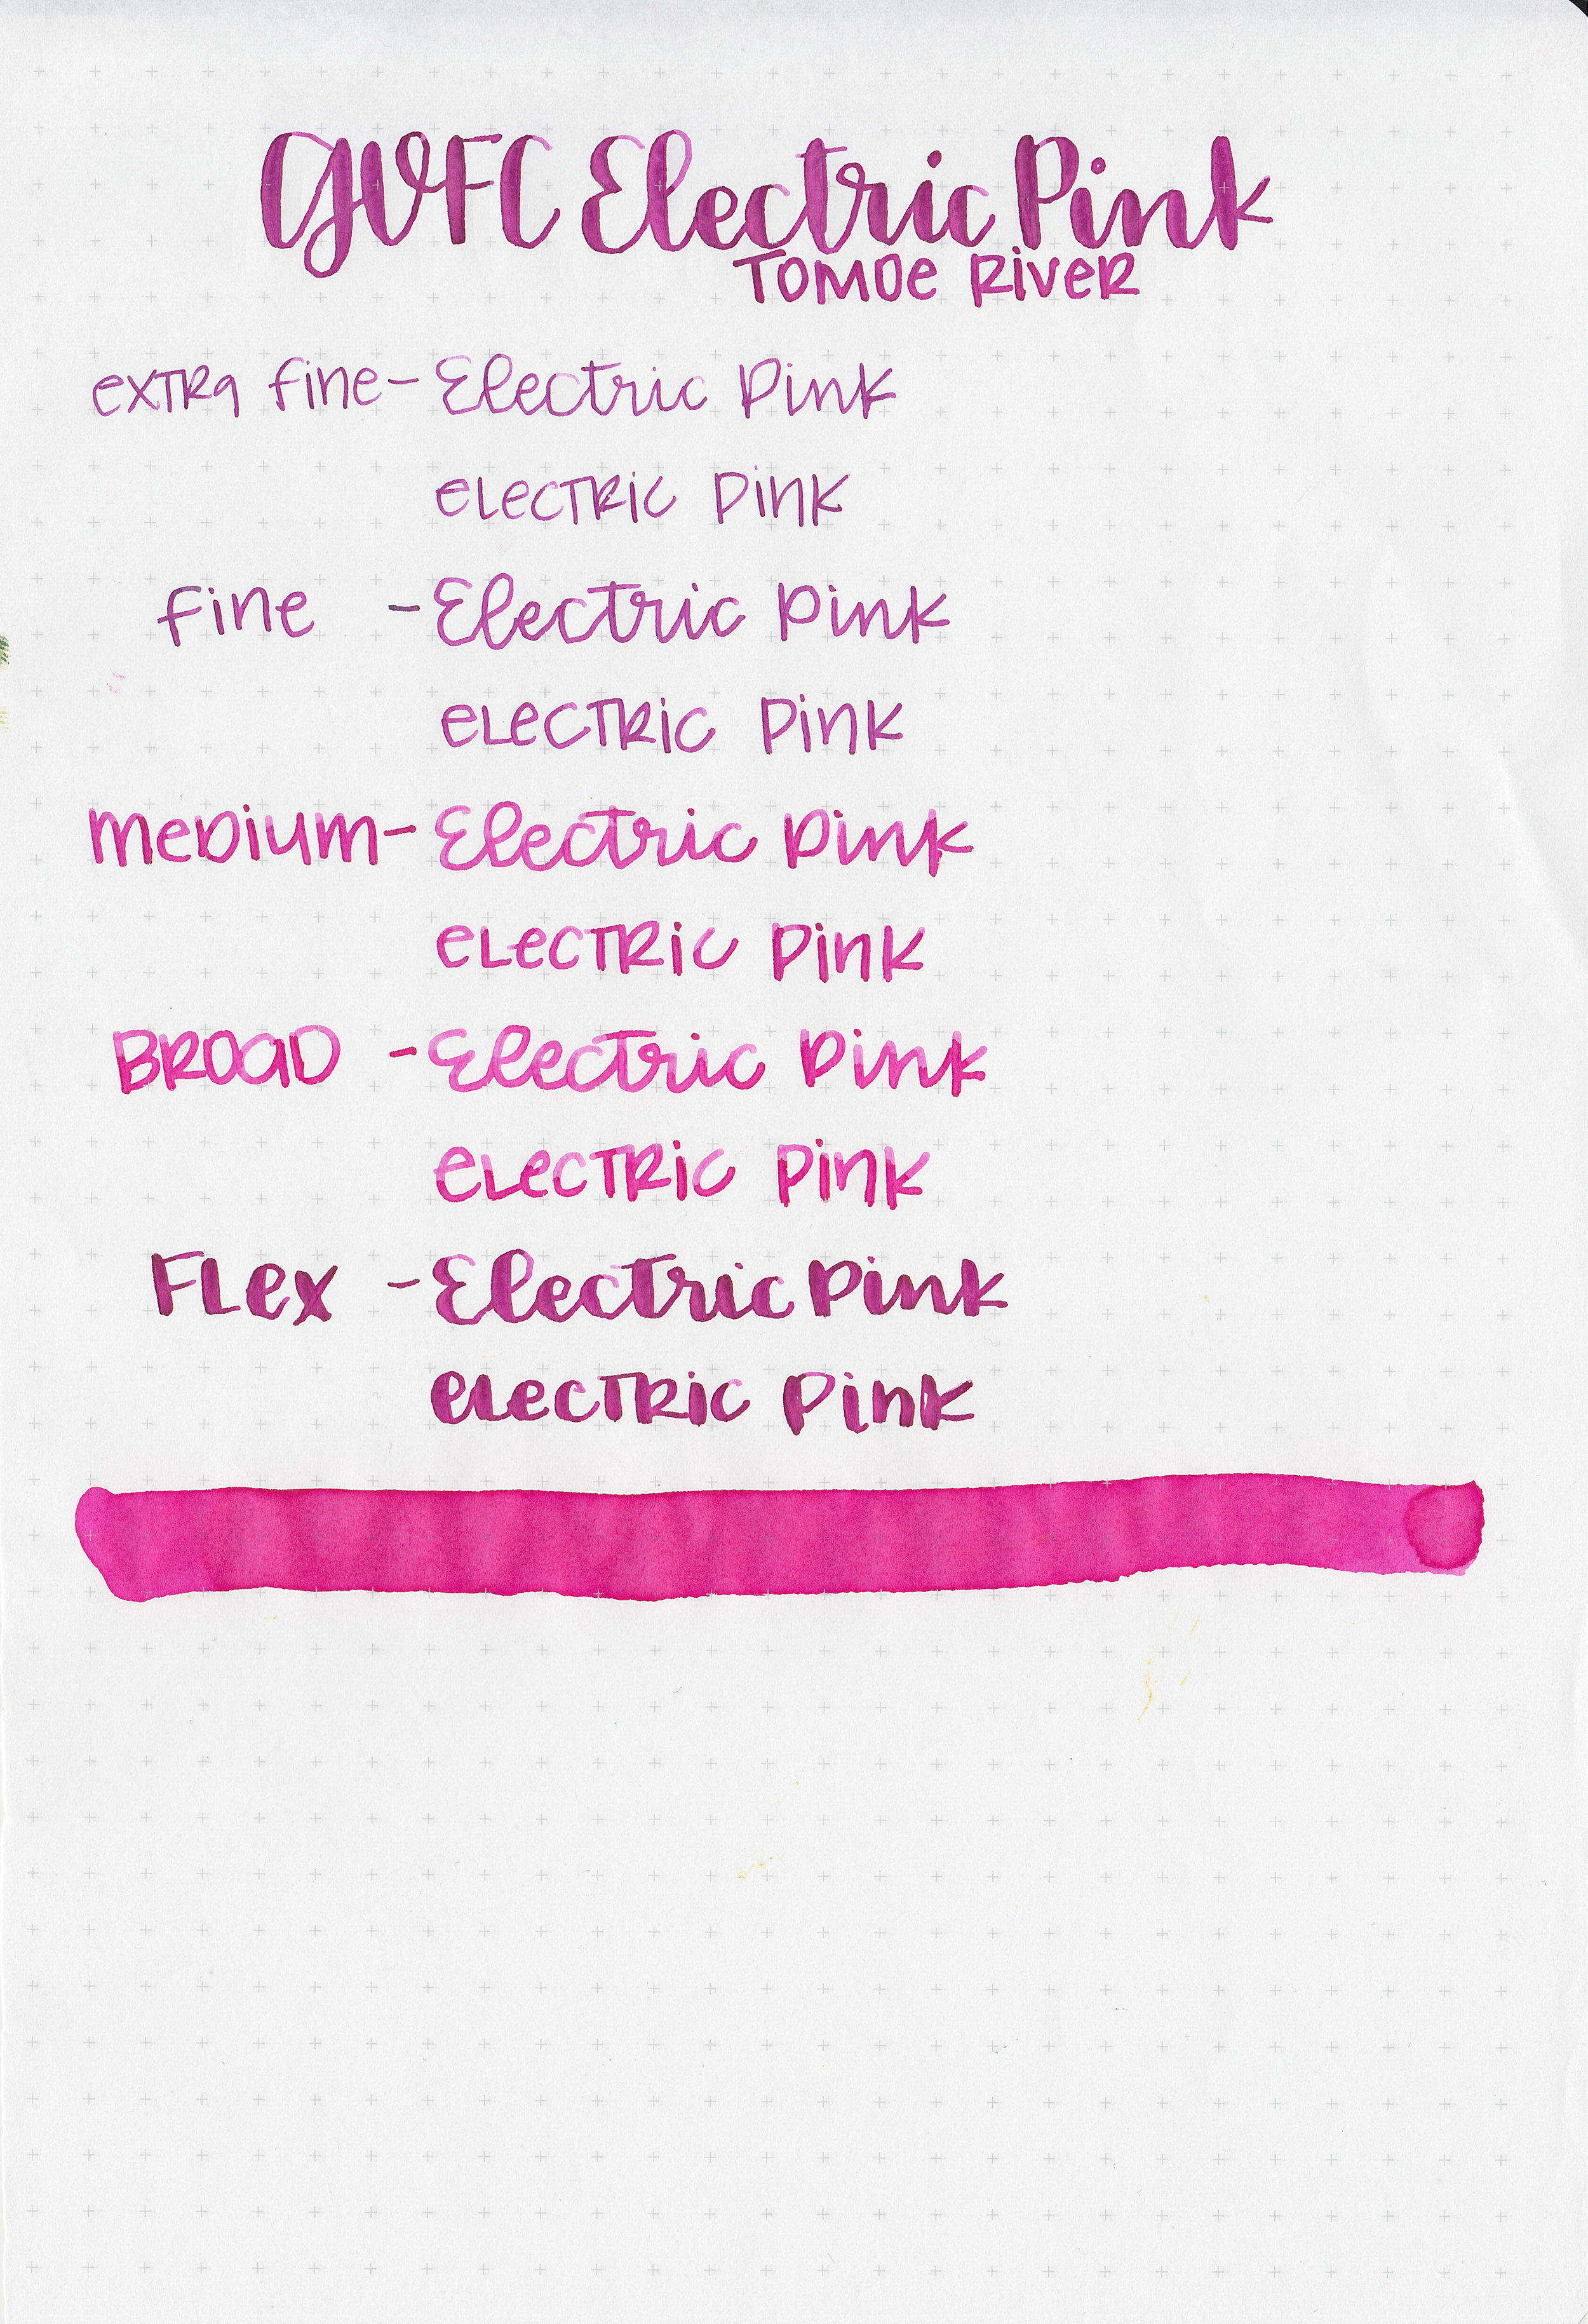 gvfc-electric-pink-10.jpg